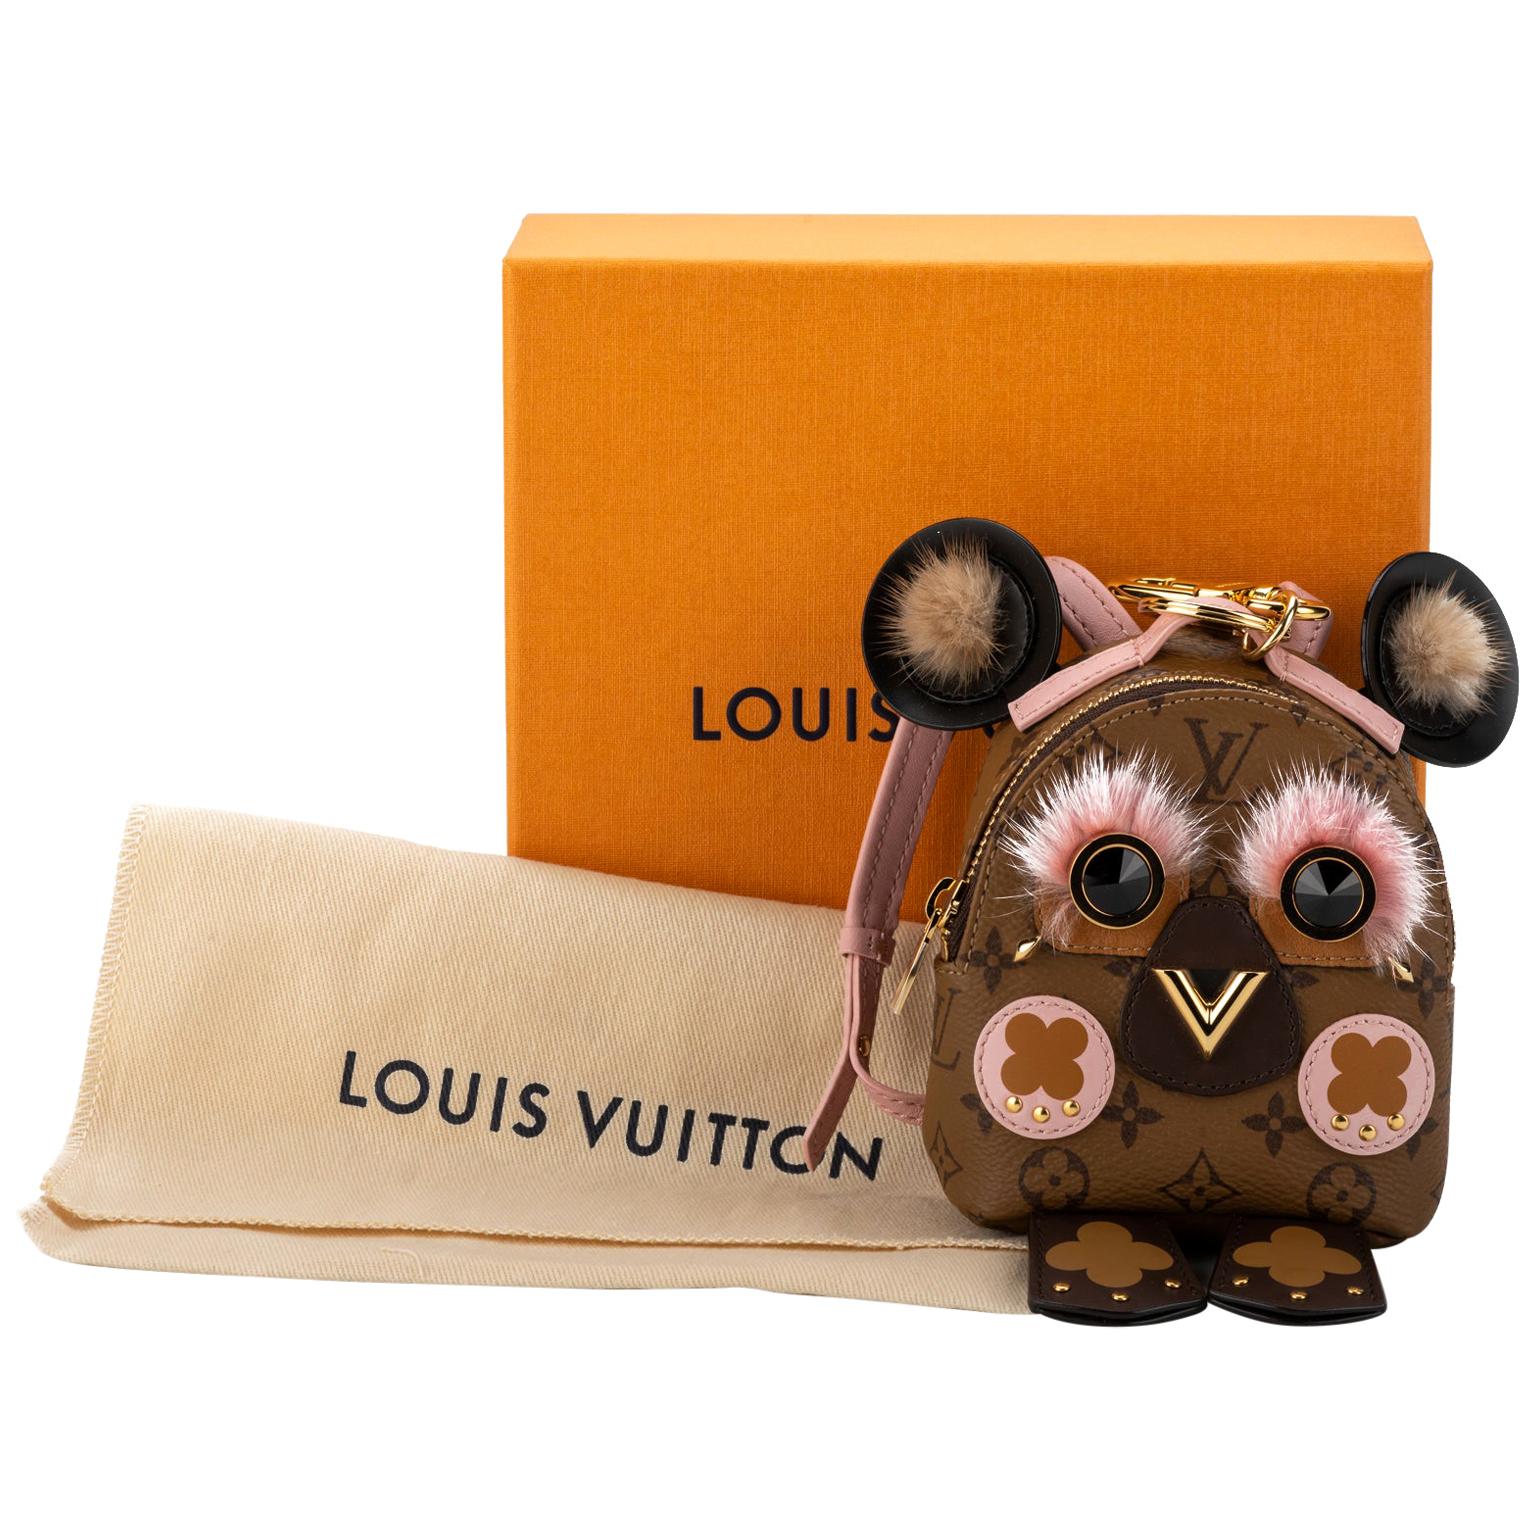 Seltener Louis Vuitton Mini Eulen-Rucksack Charme, Originalverpackt